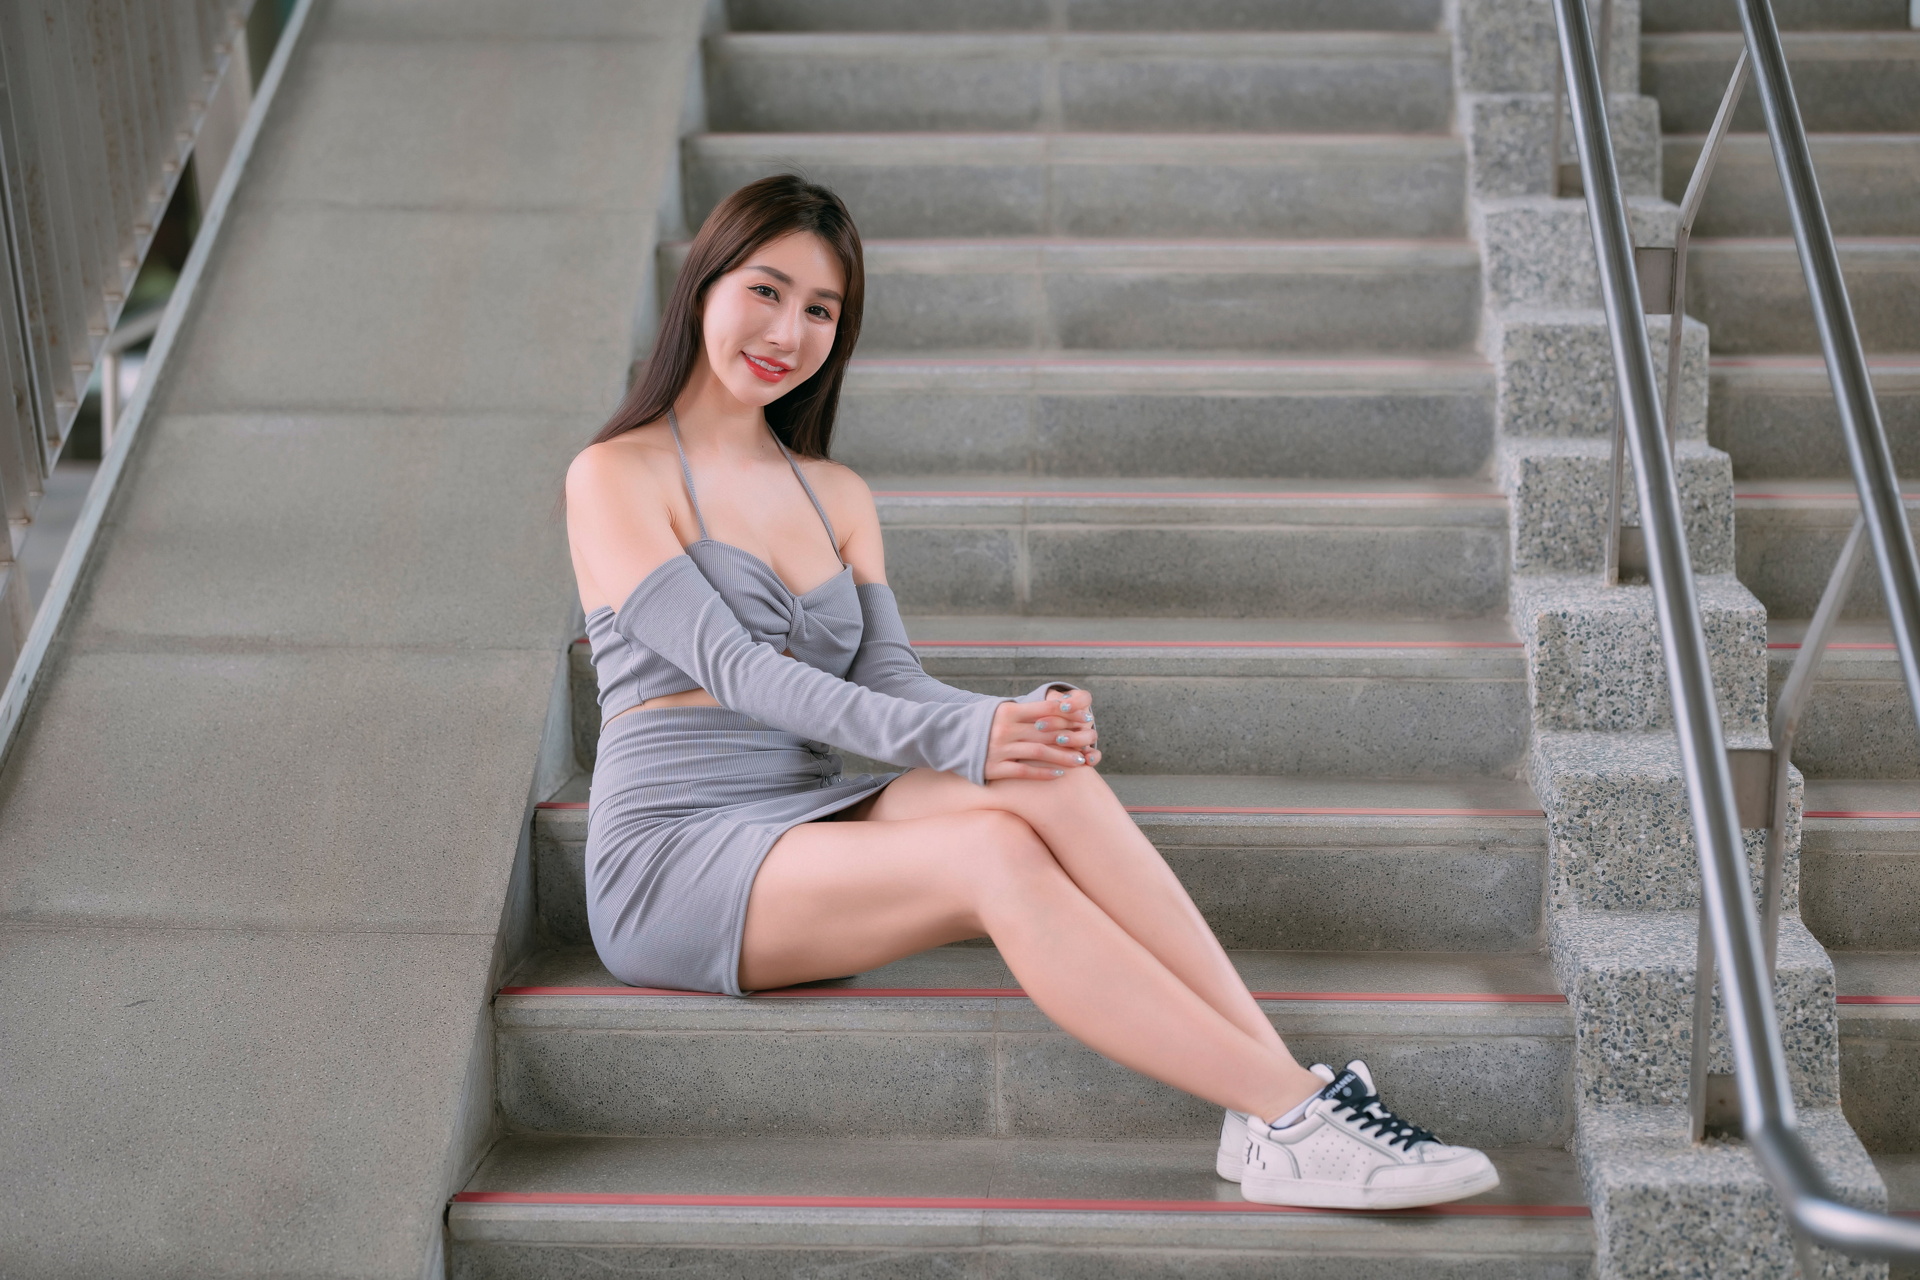 Asian Model Women Long Hair Dark Hair Sitting Stairs Sneakers Grey Skirt Grey Tops Iron Railing 1920x1280